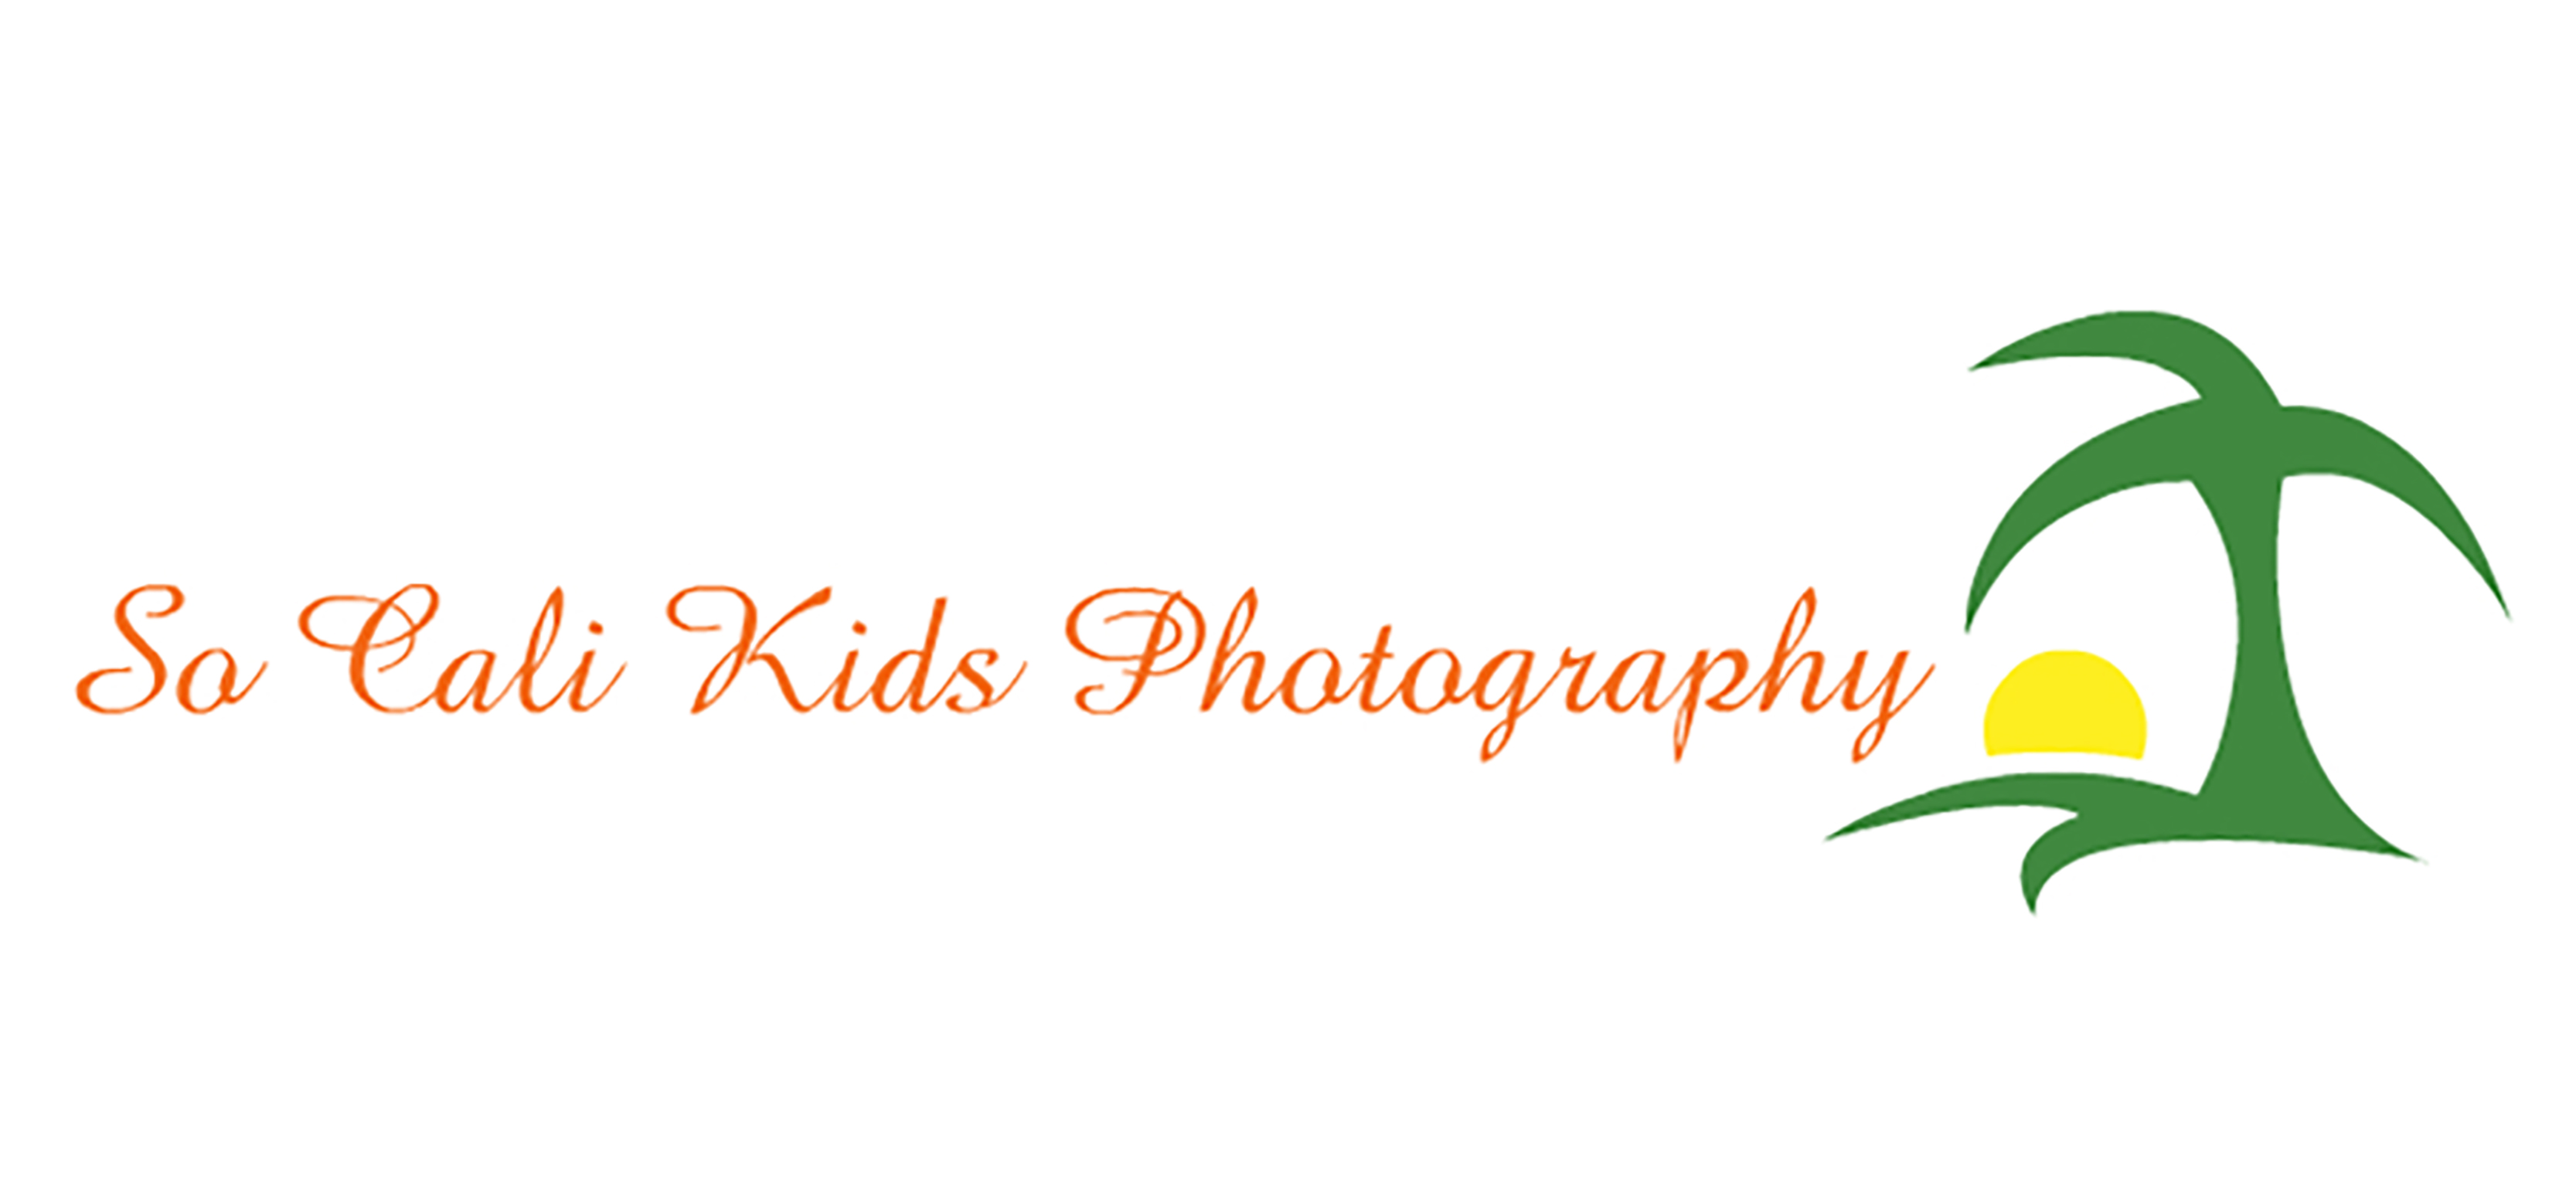 So Cali Kids Photography